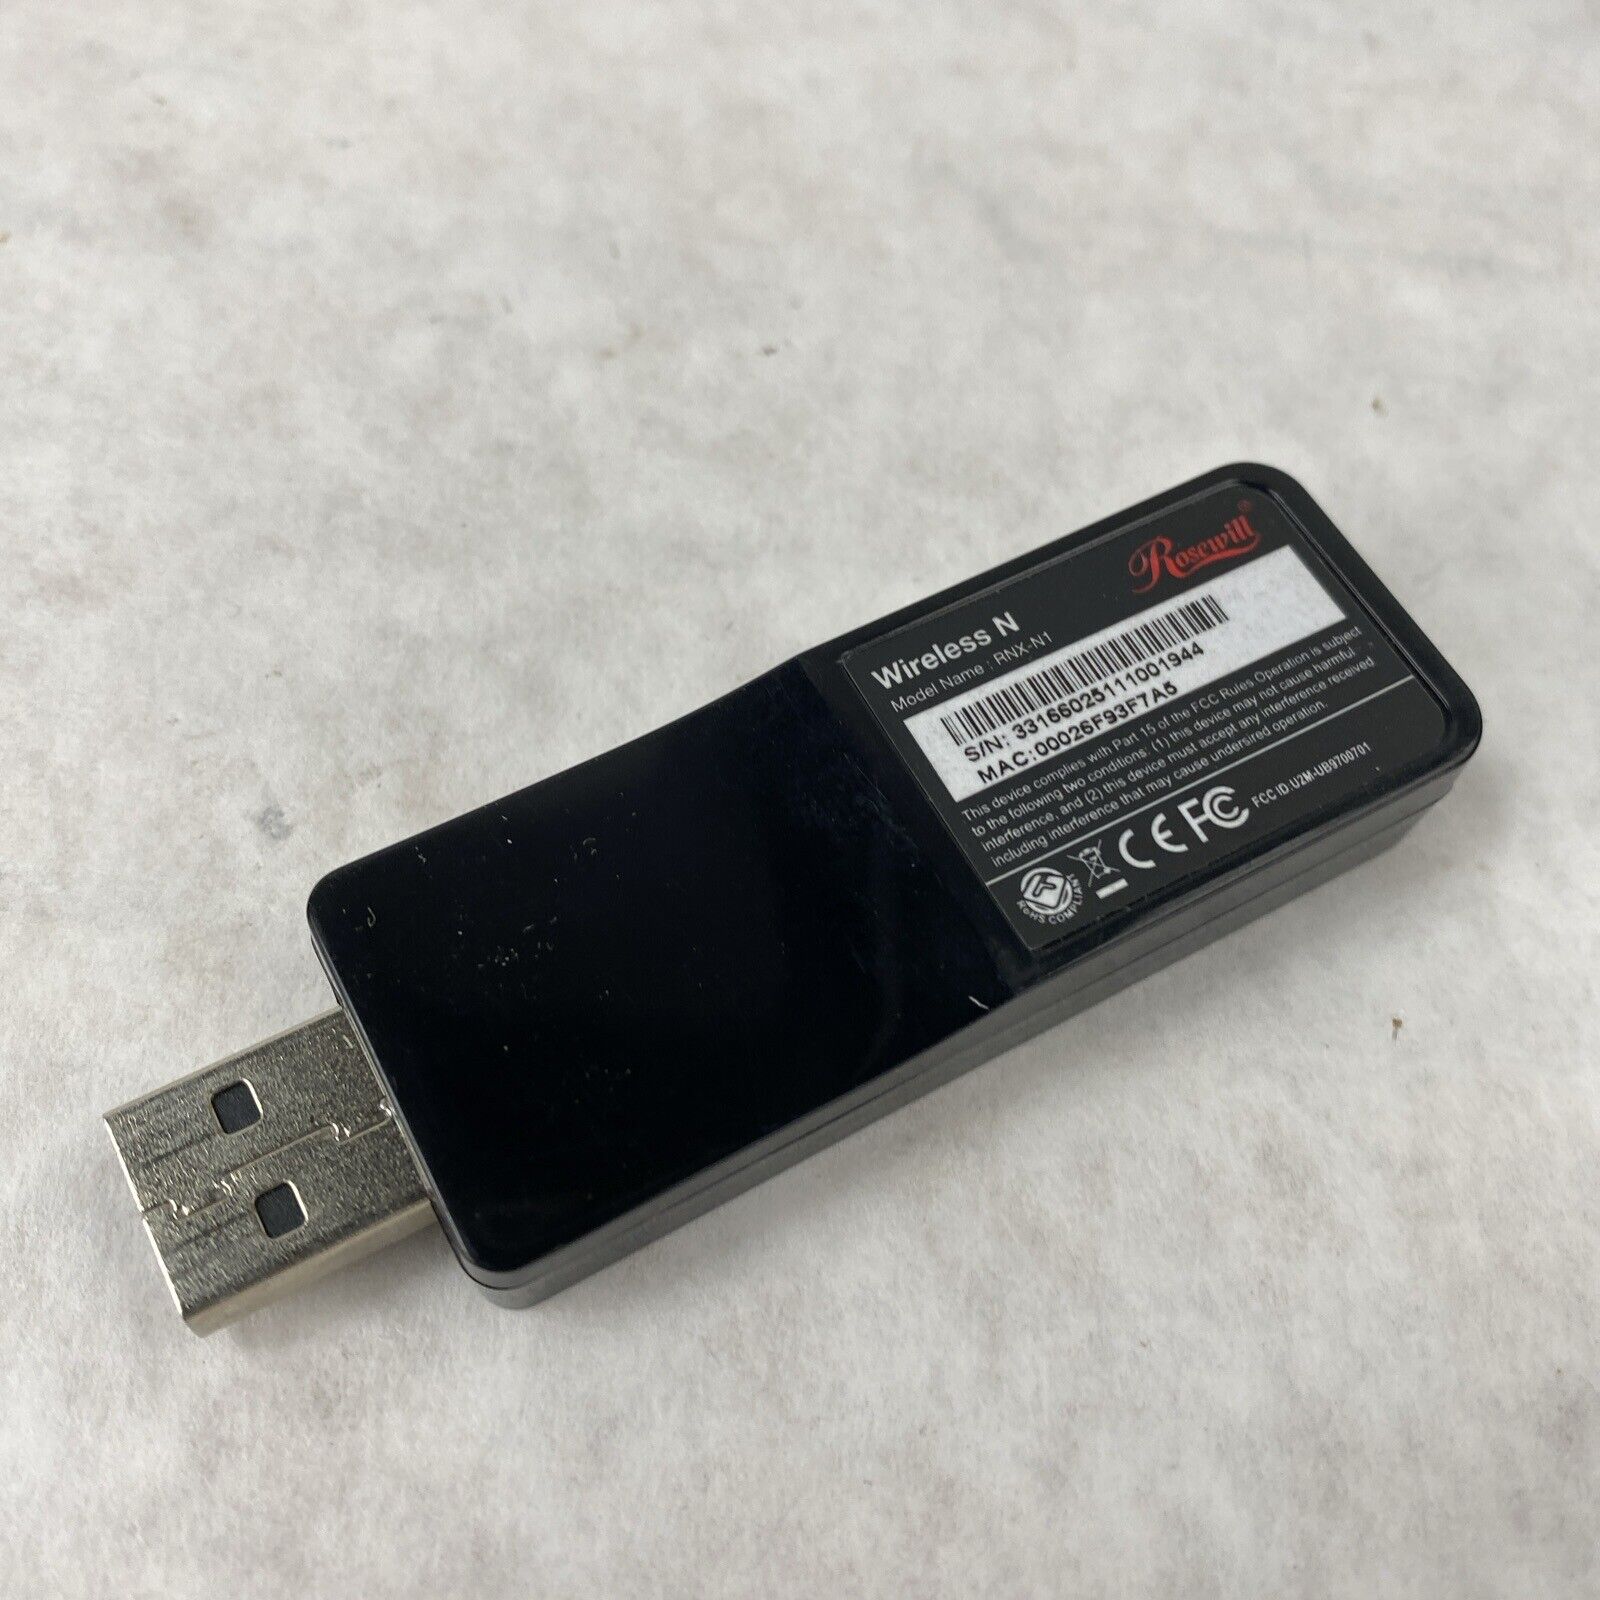 Rosewill RNX-N1 Trident X Series 802.11n 2.0 Wireless USB Adapter